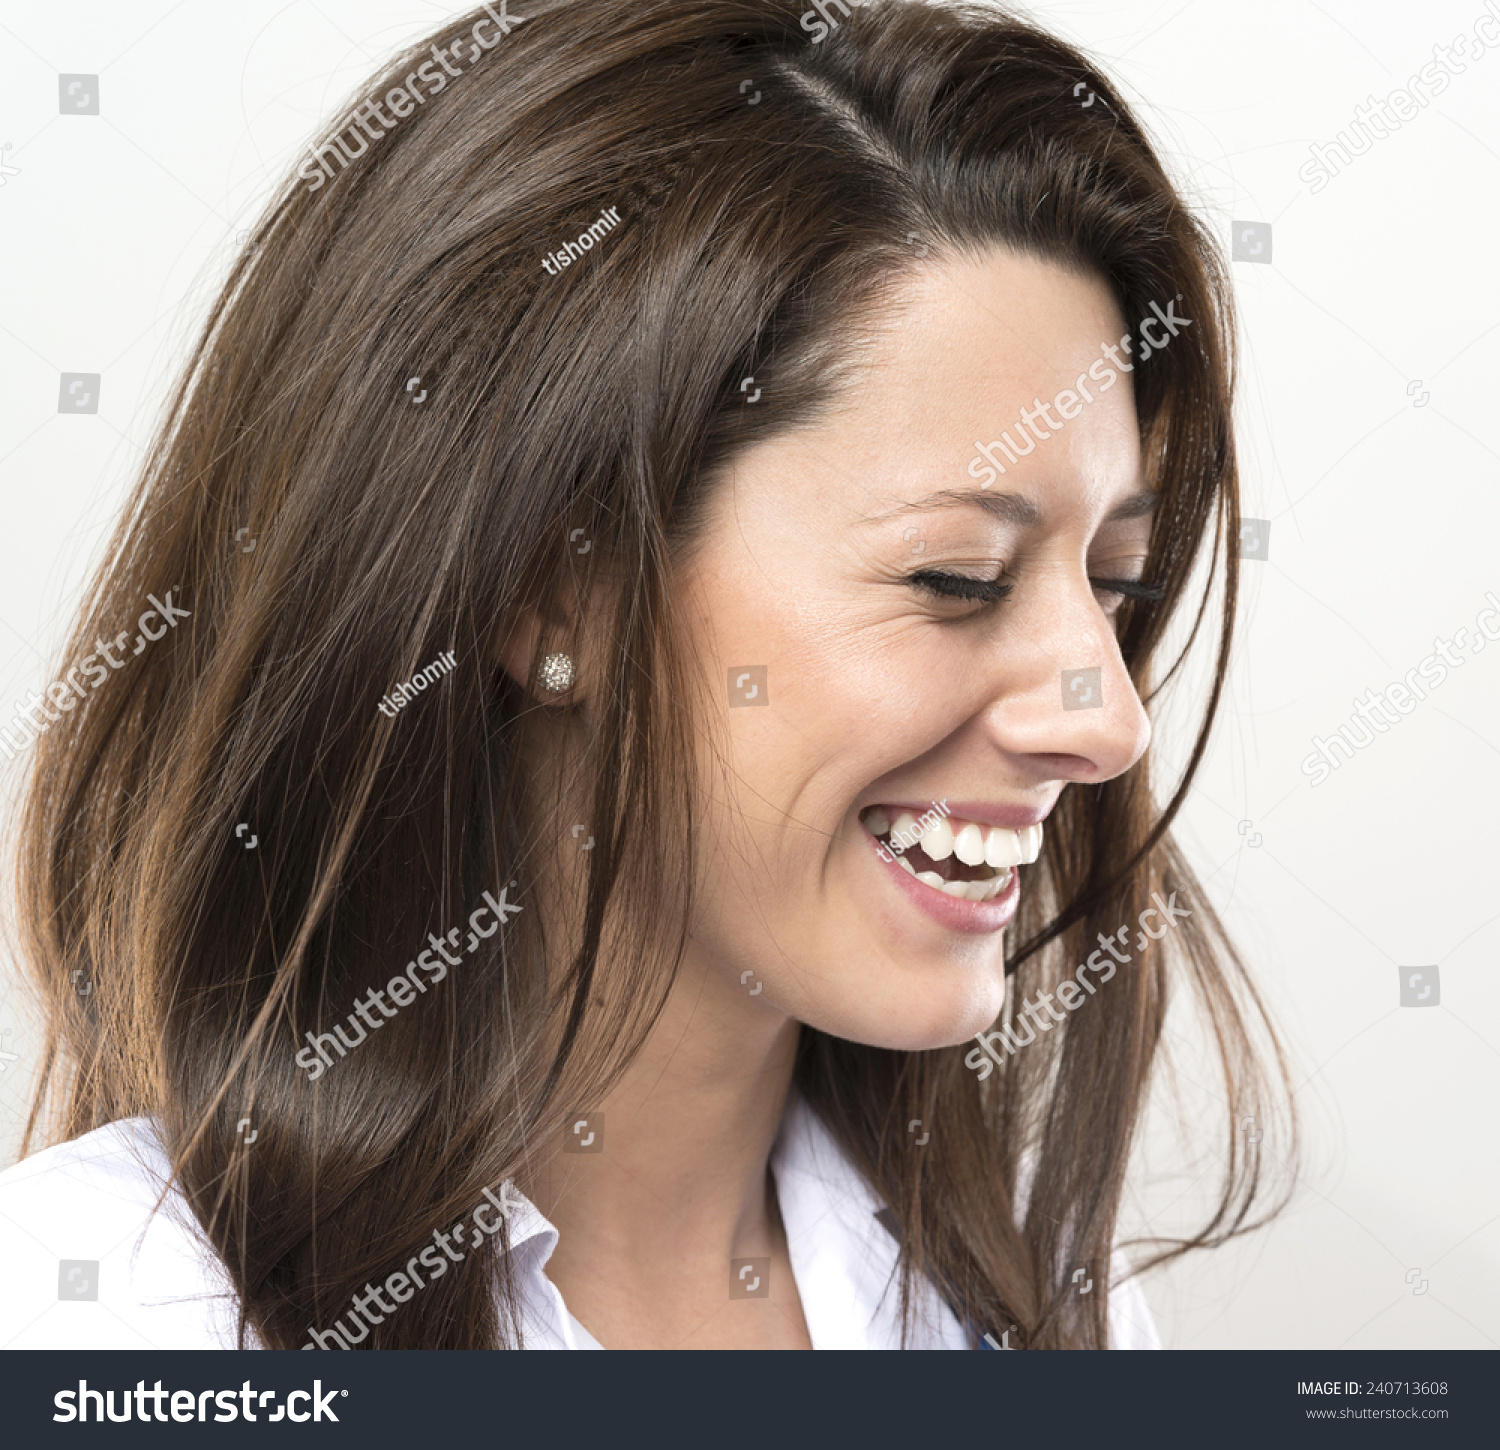 Very Close Smiling Girl Head Shot Stock Photo 240713608 - Shutterstock